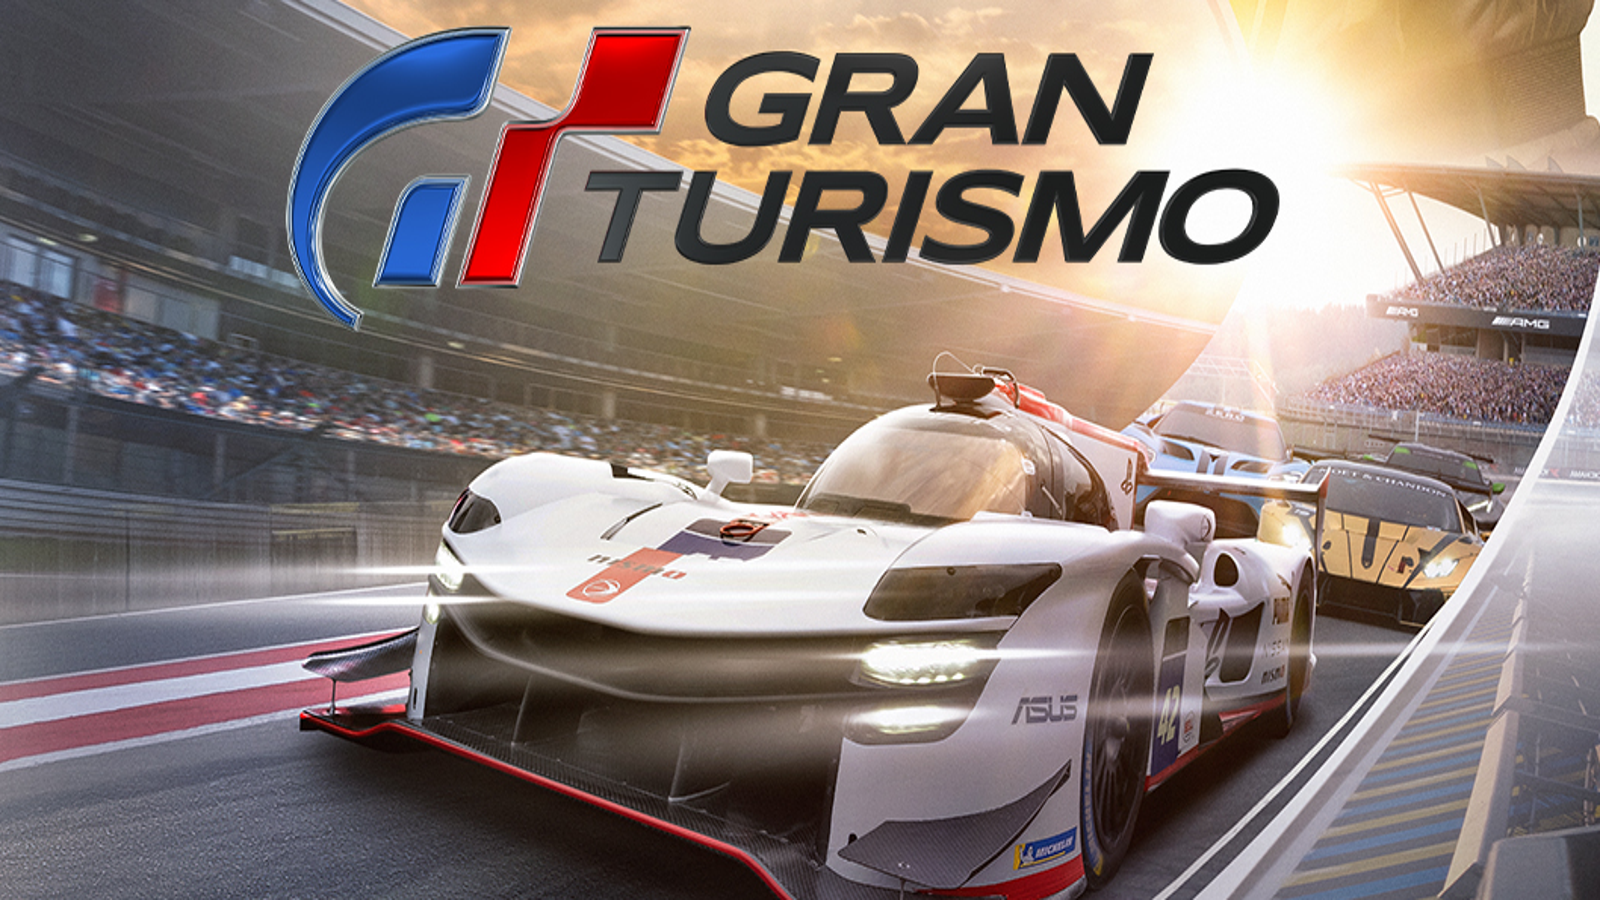 Gran Turismo 7 opening movie - Gematsu